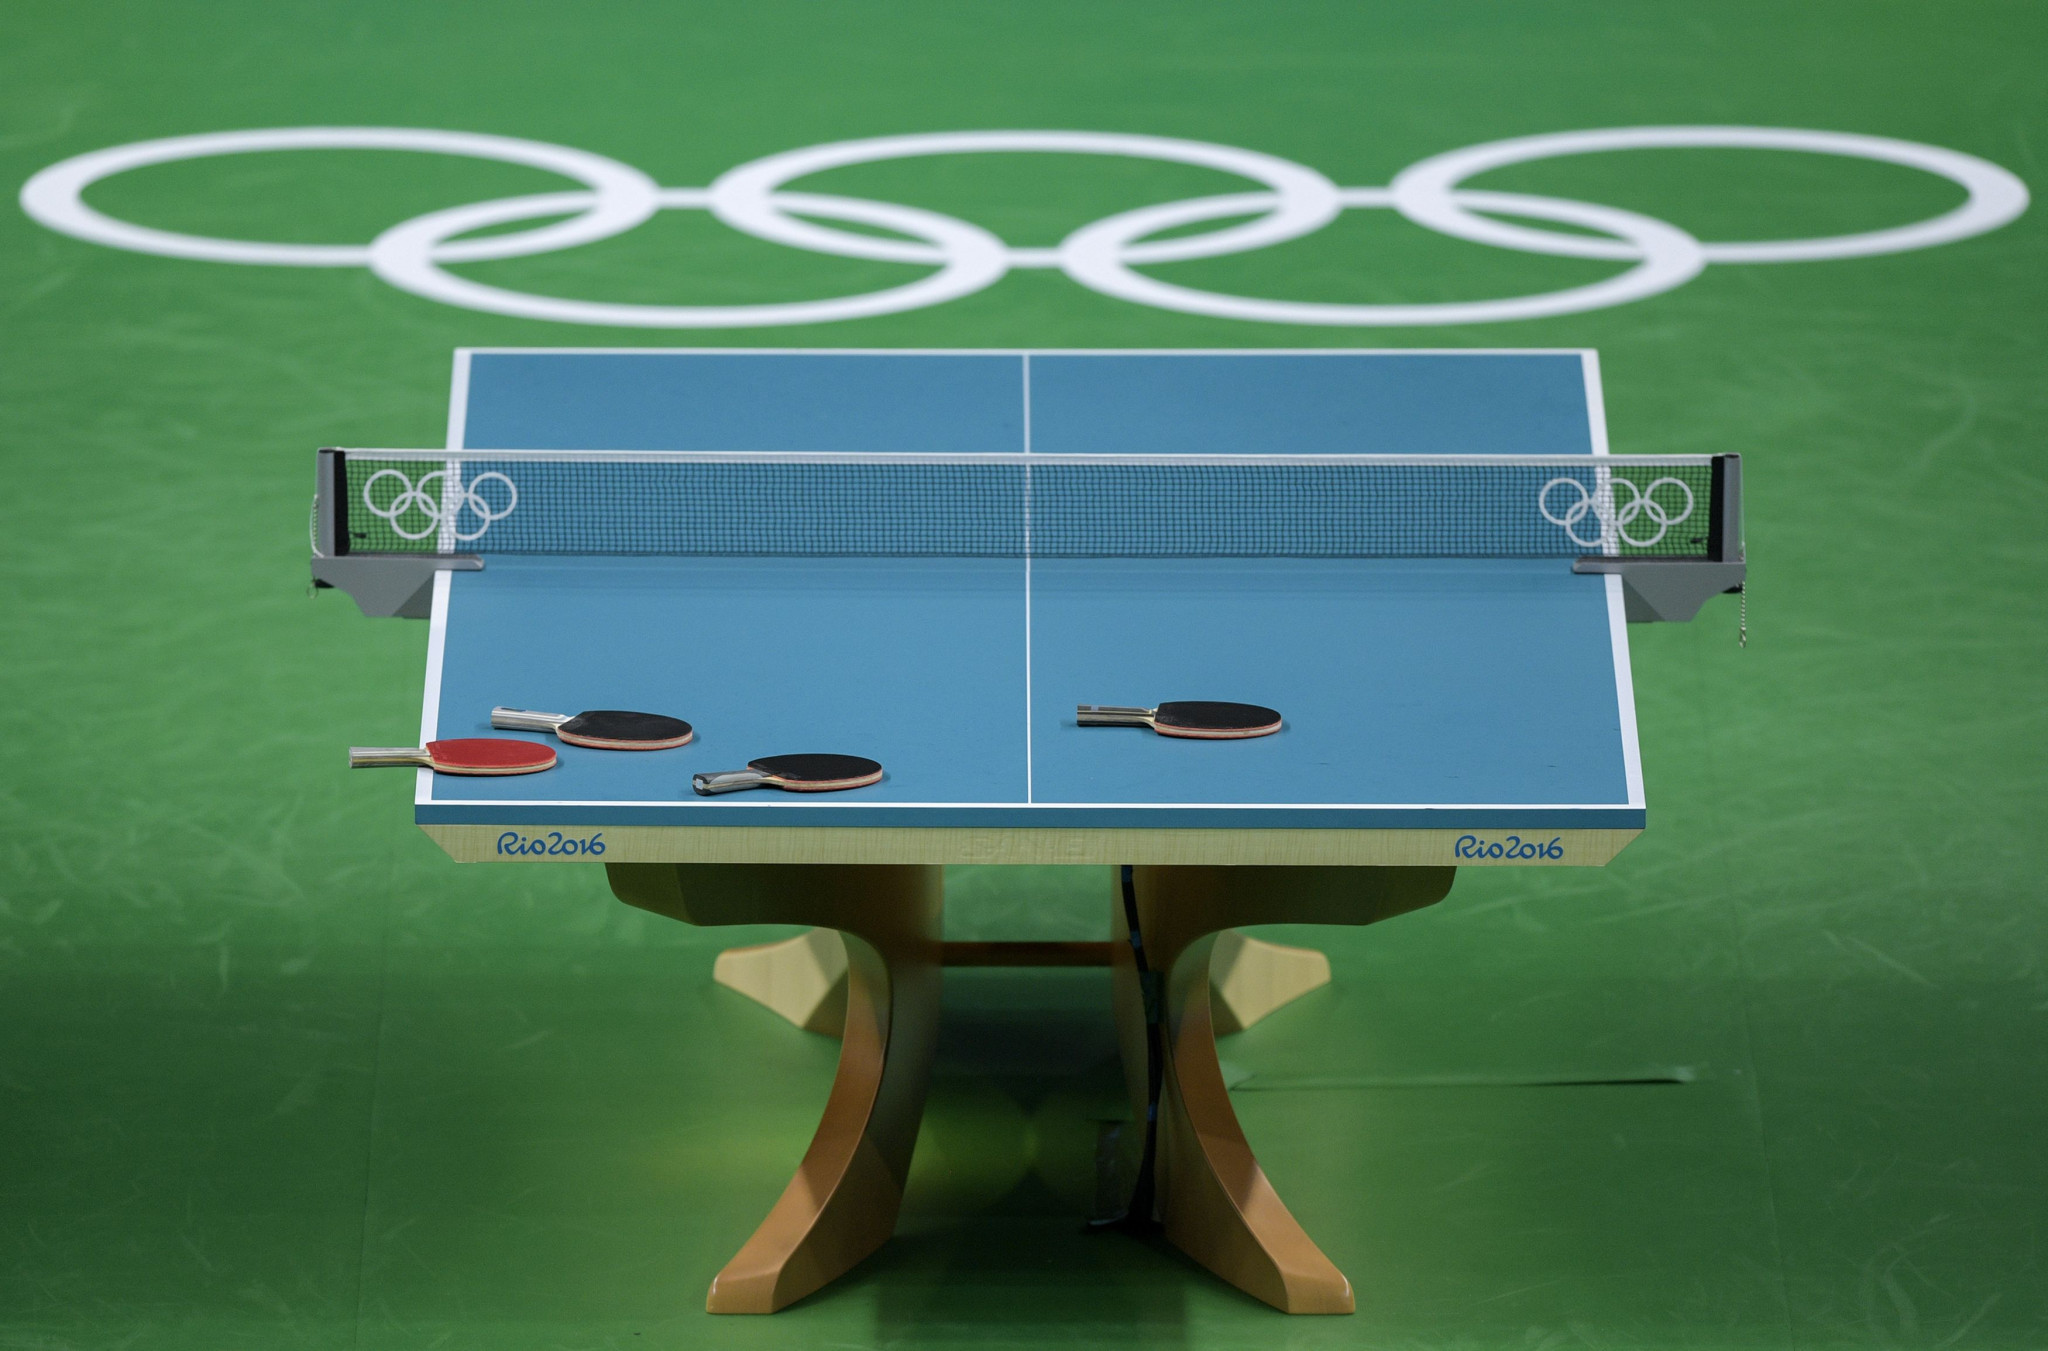 Table tennis olympics